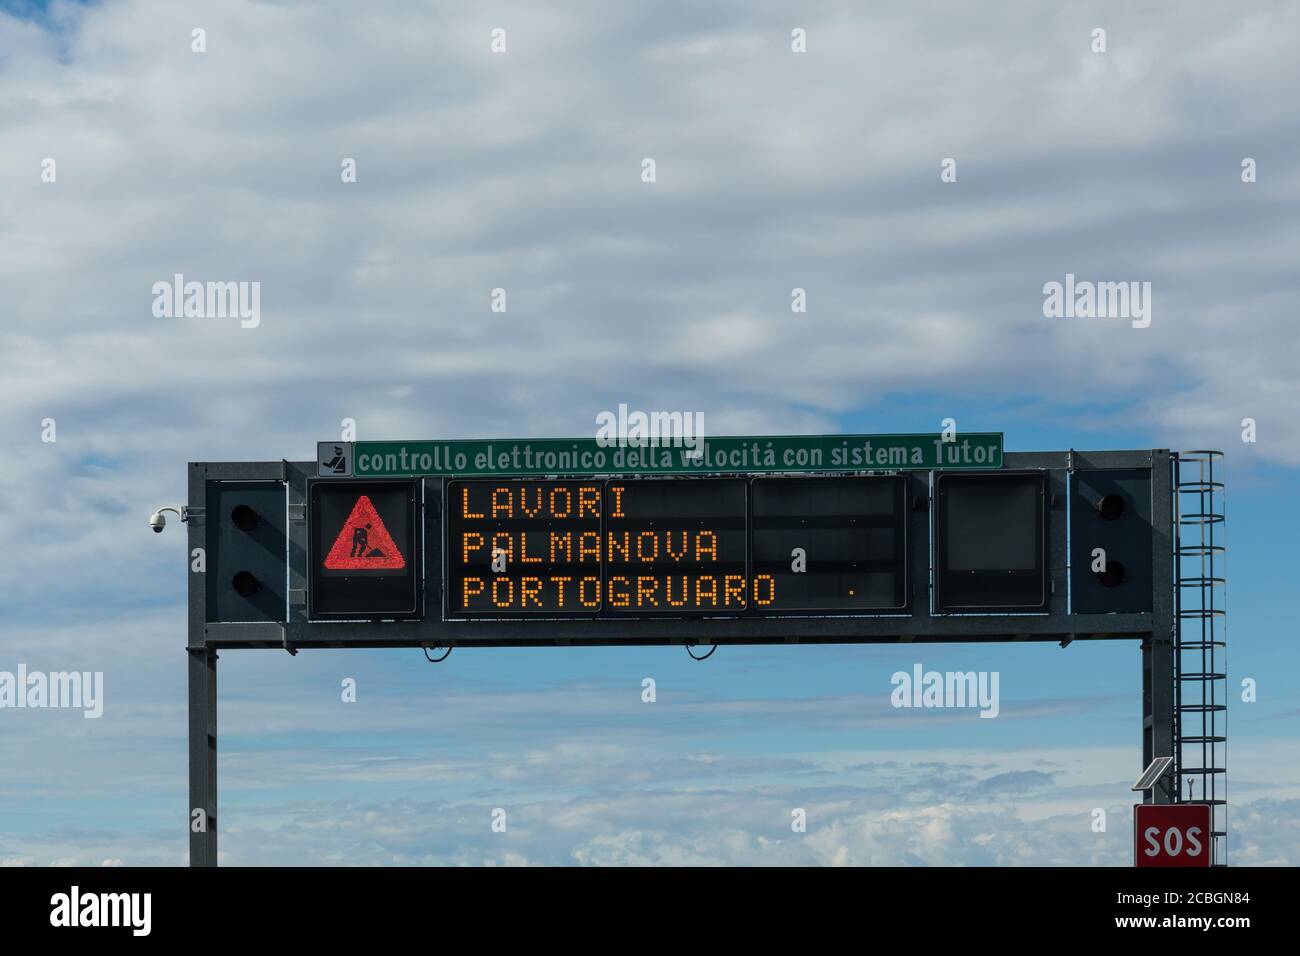 Electronic traffic information sign on Italian motorway warning of road works between Palmanova and Portogruaro Stock Photo